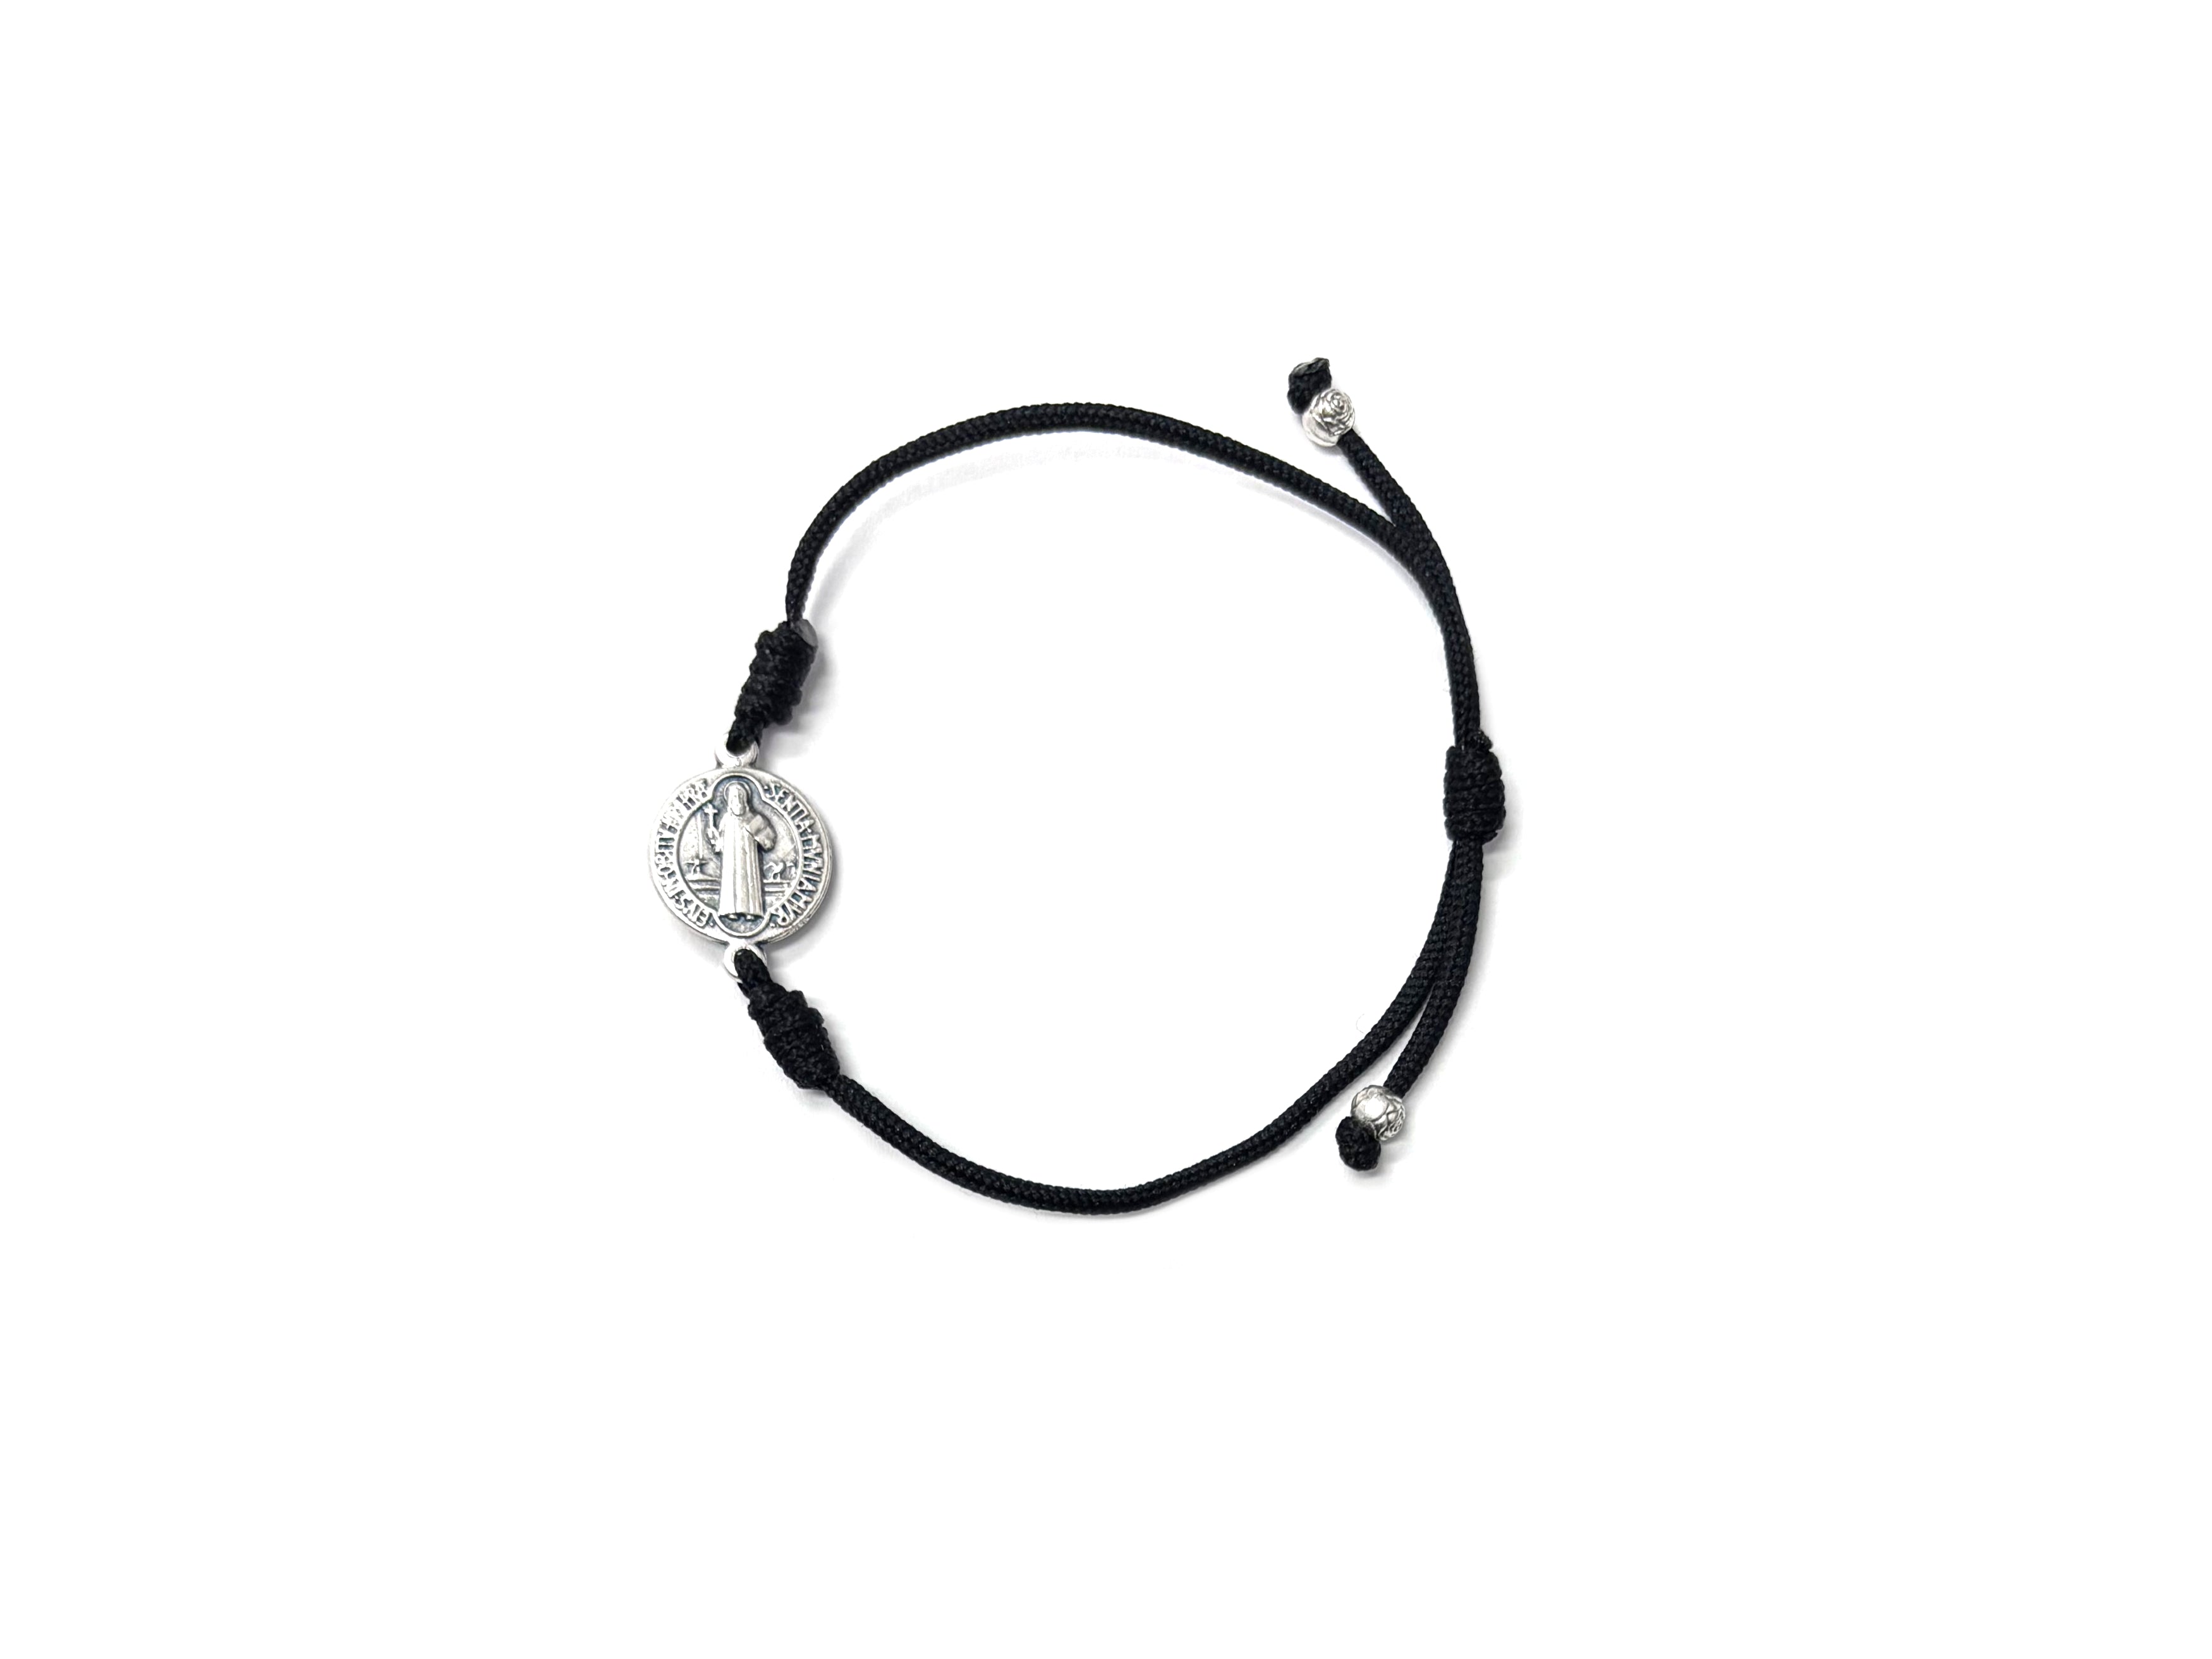 Saint Benedict cord bracelet